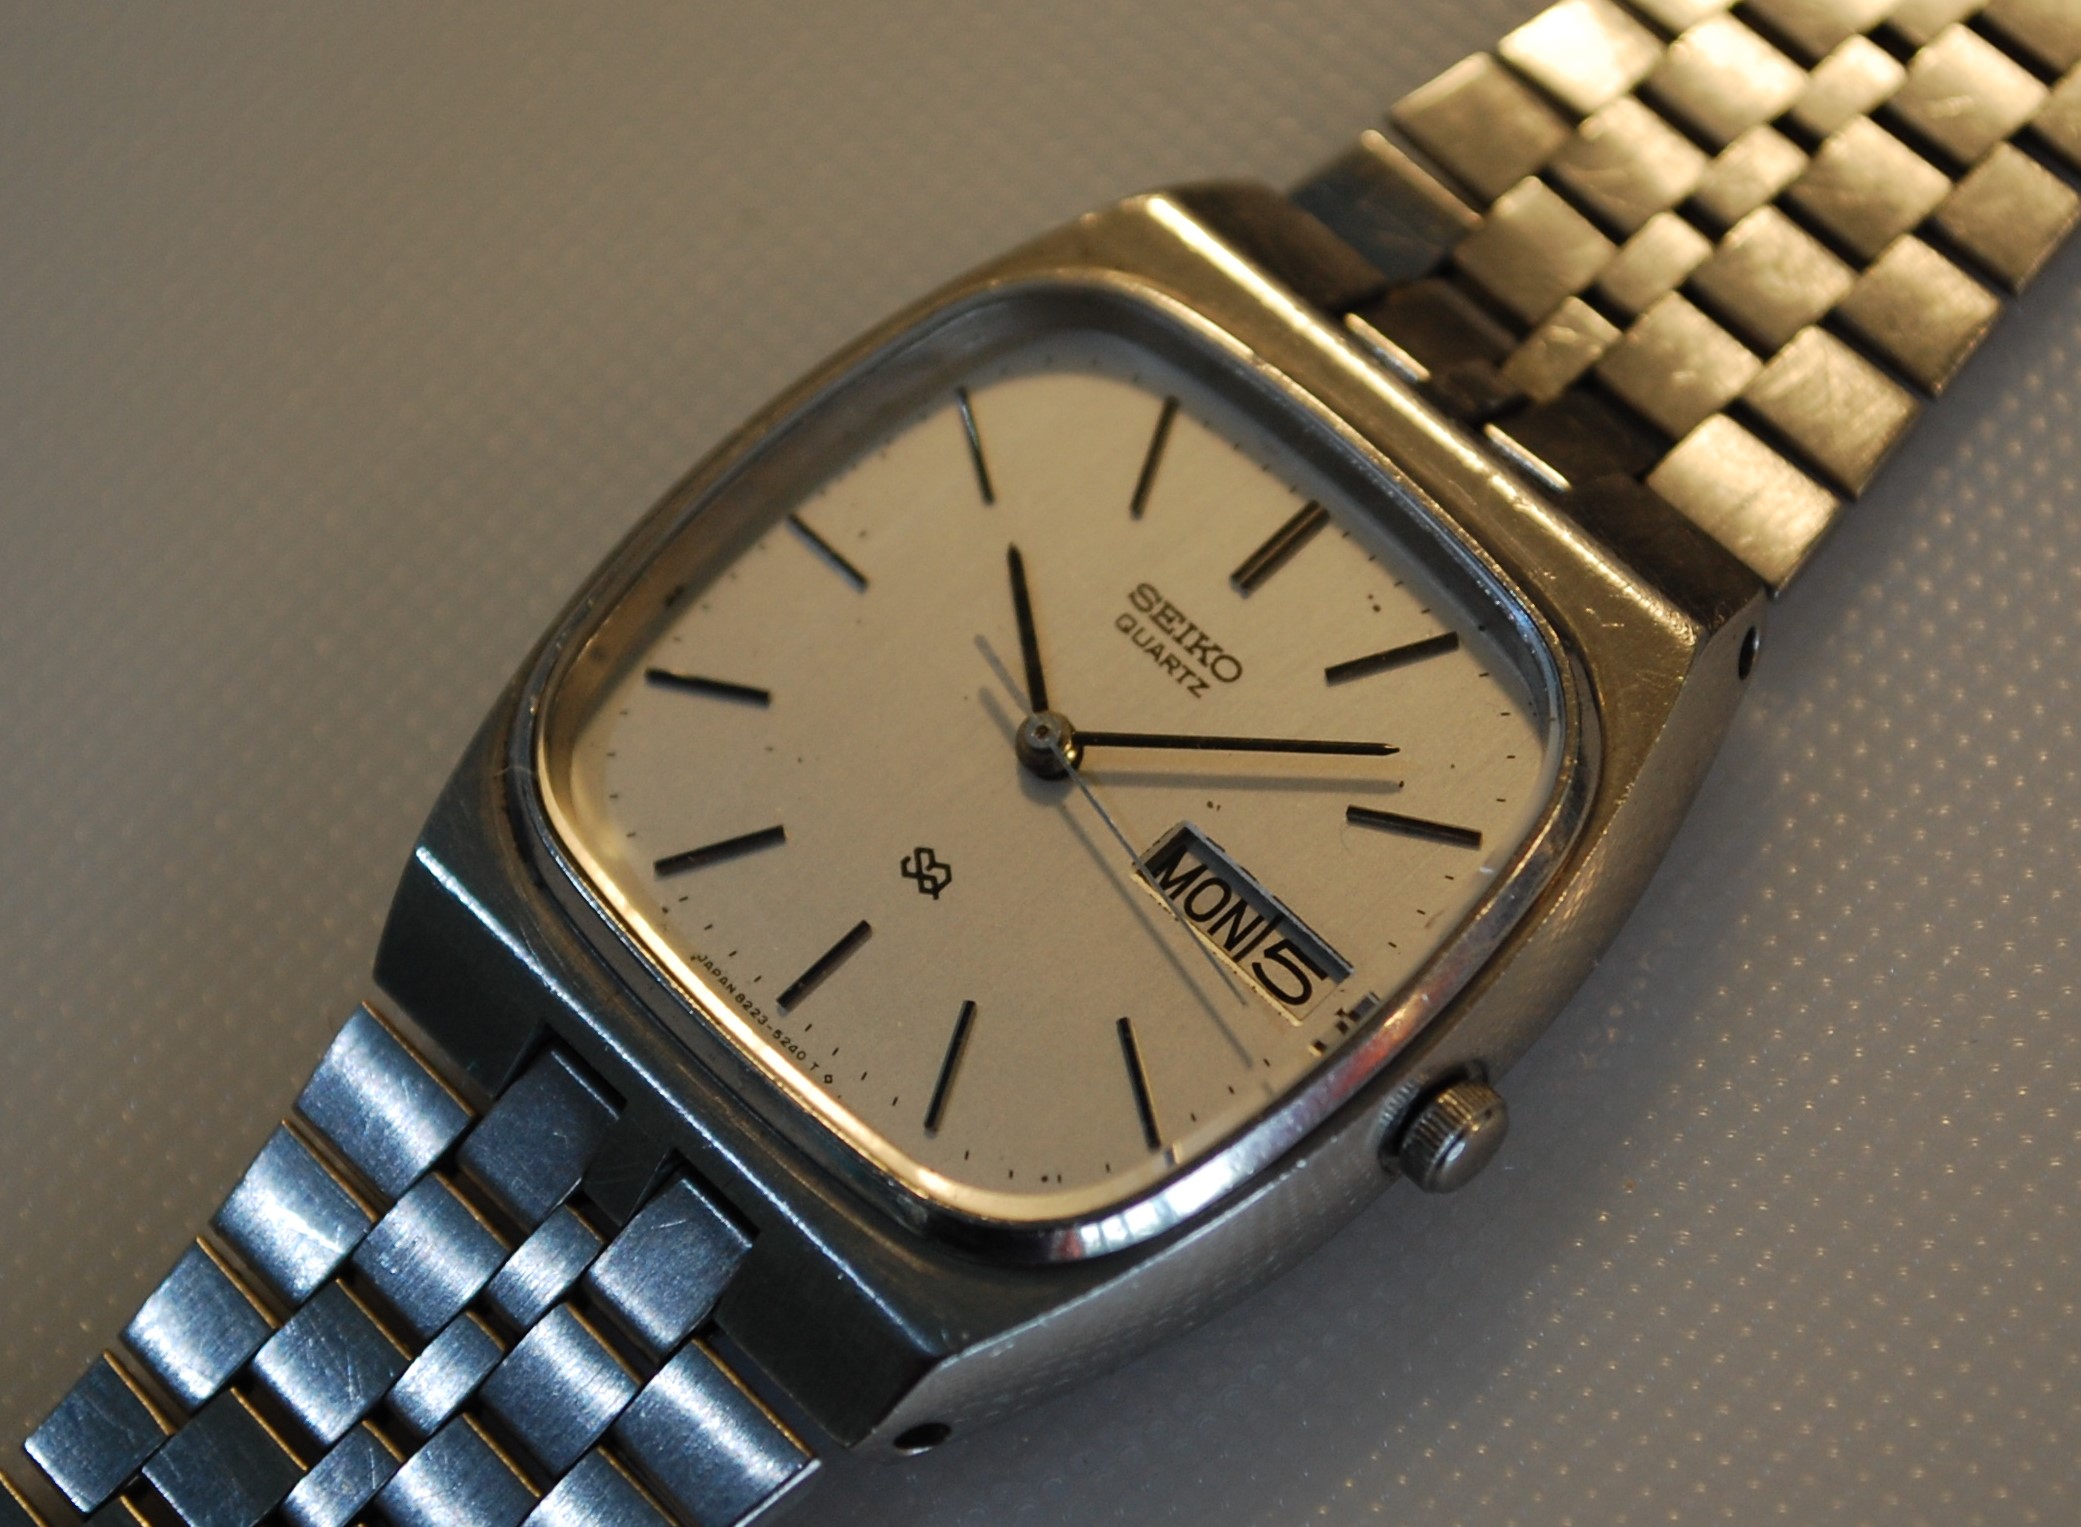 CITIZEN Vintage Analog Digital LCD Quartz Watch CR-2014 9610 NOS AnaDigi  1980s | eBay